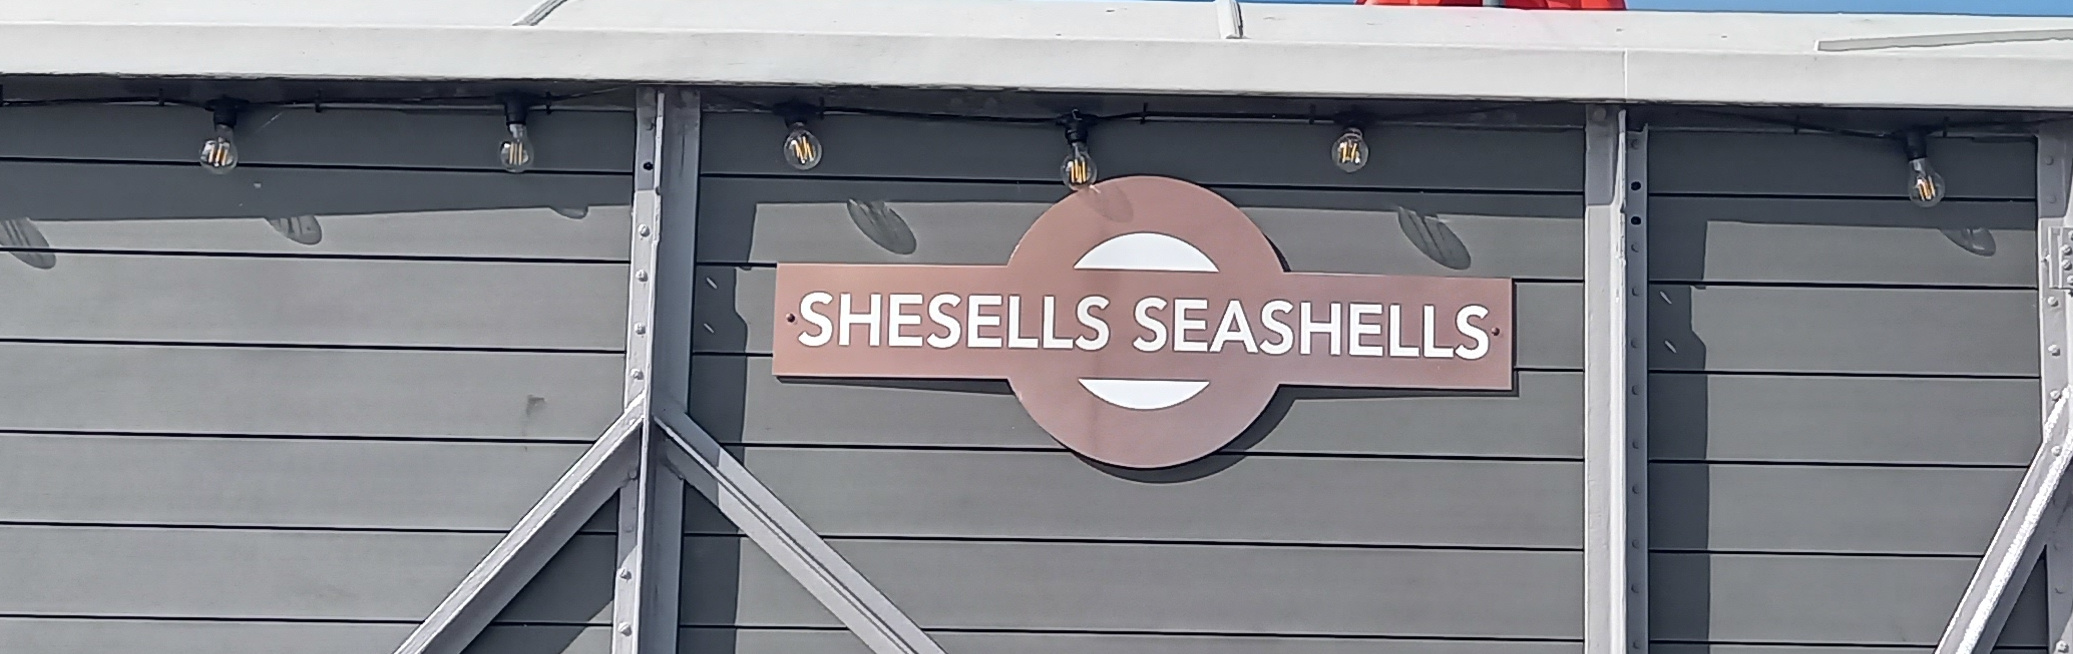 Shesells Seashells sign